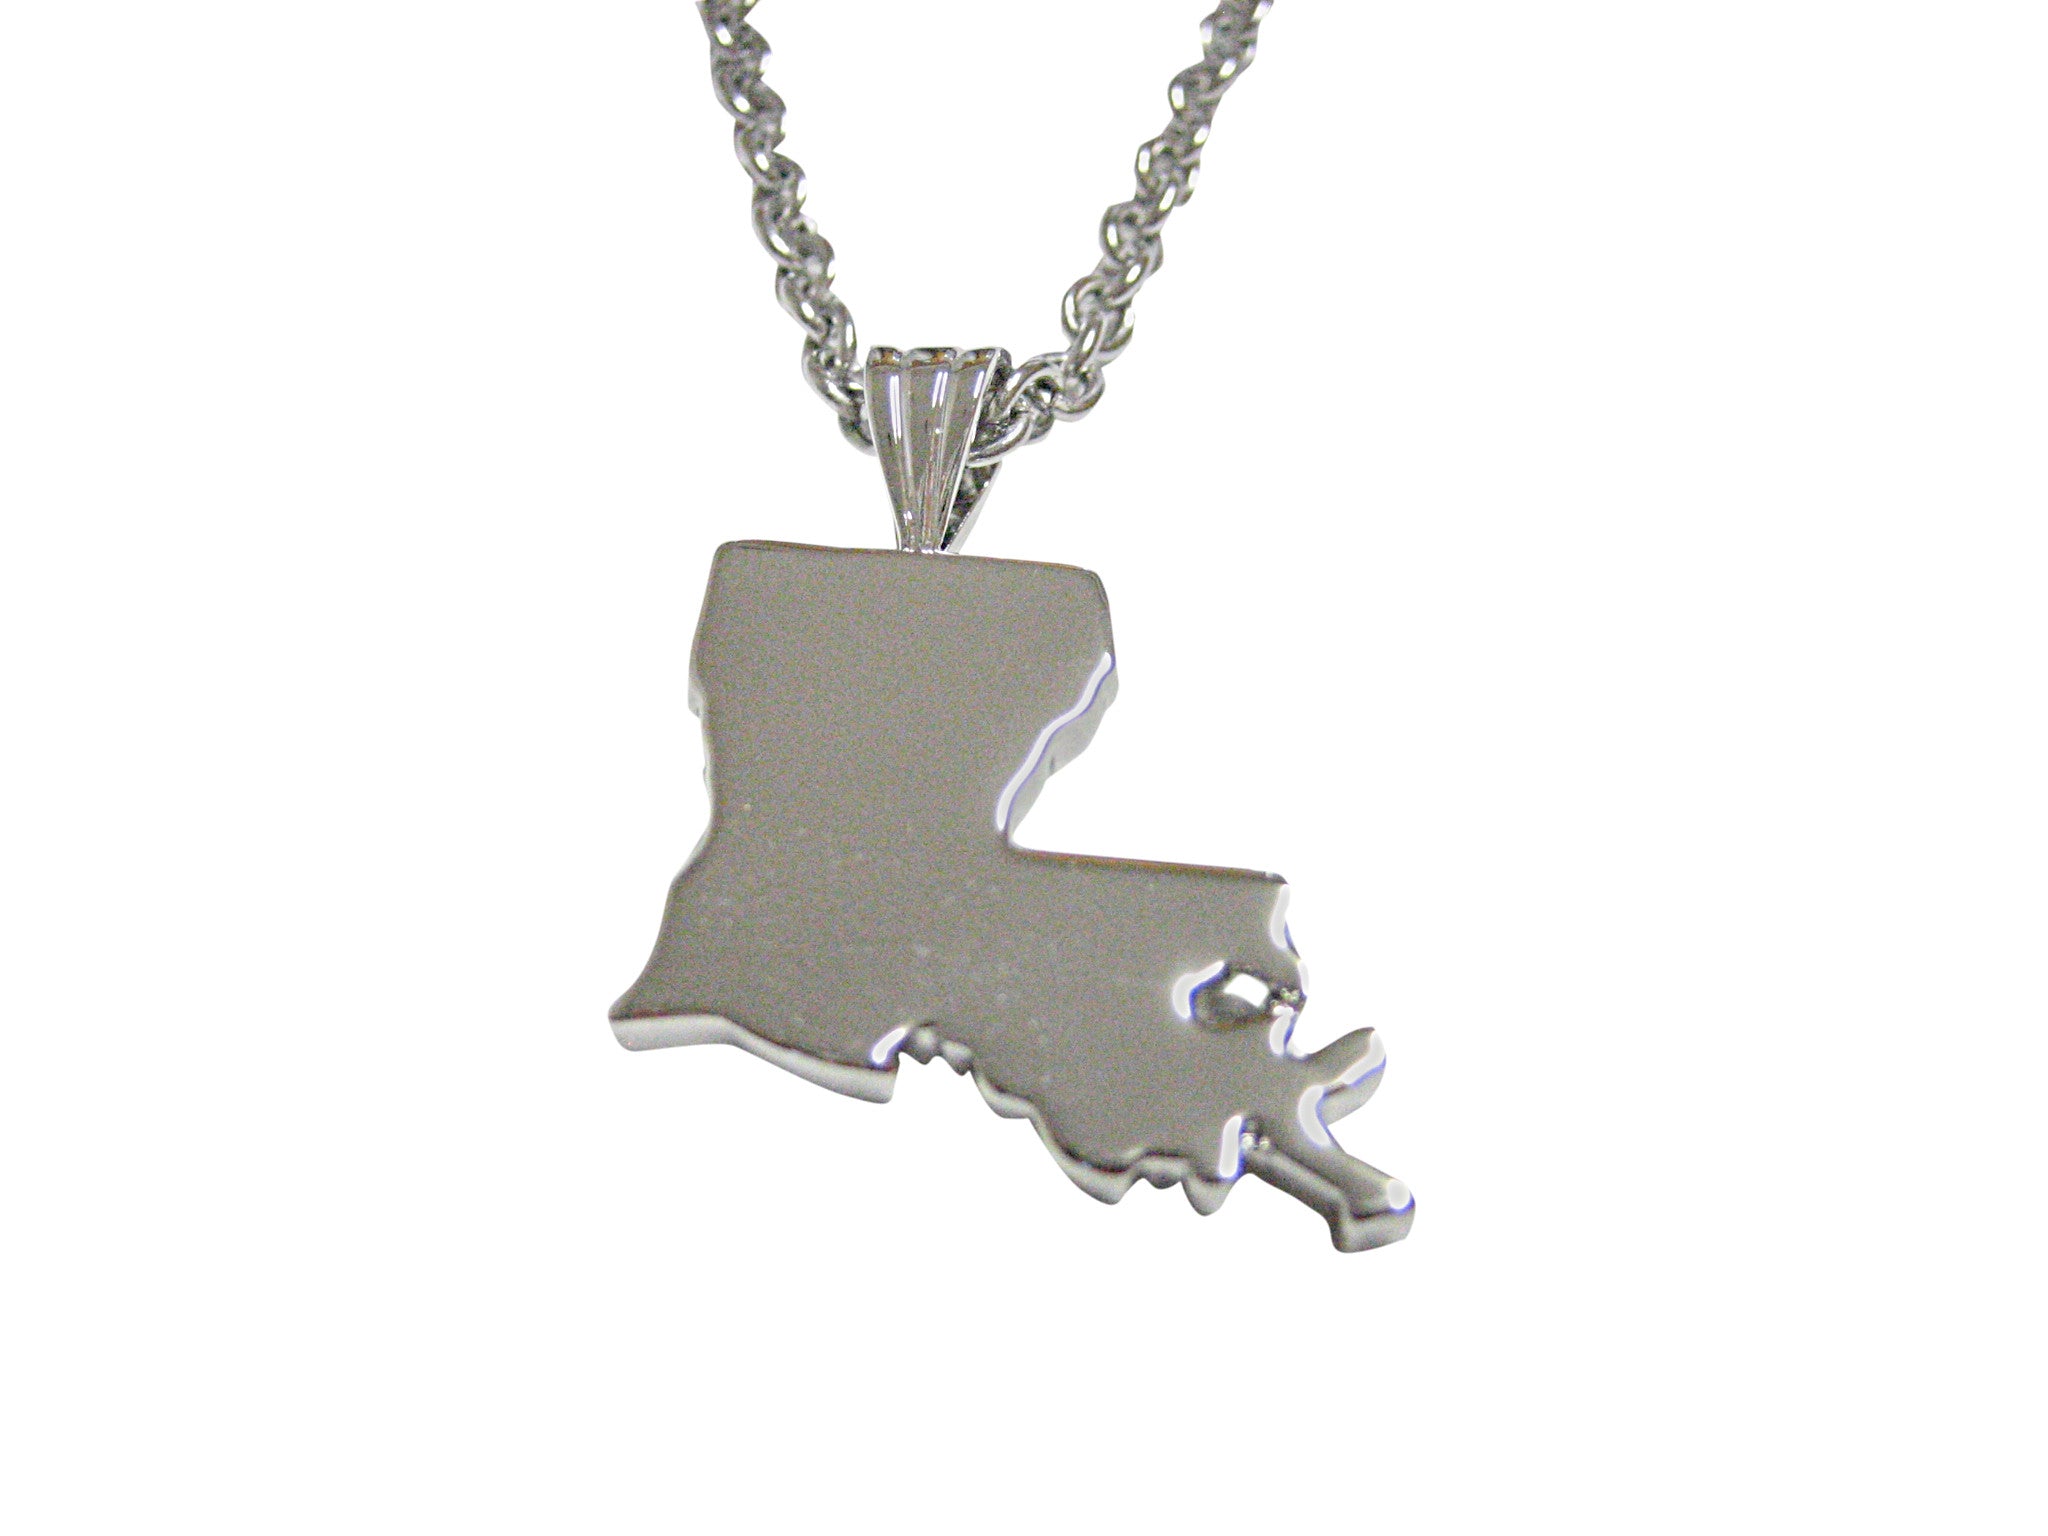 Silver Toned Louisiana State Map Outline Pendant Necklace - Kiola